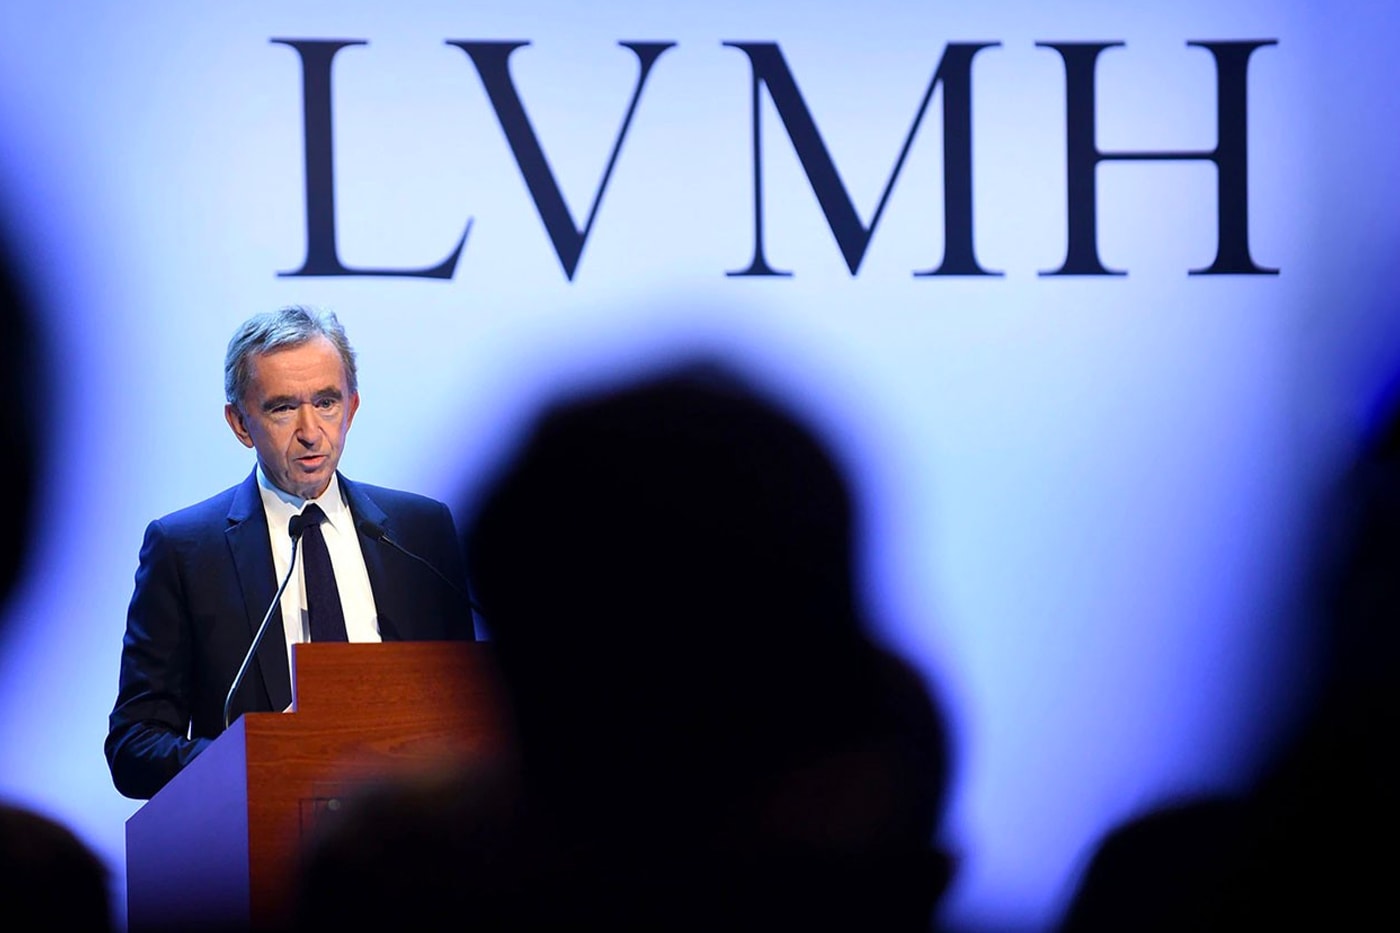 LVMH considering takeover of Richemont Report swiss paper finanz und Wirtschaft whispers 